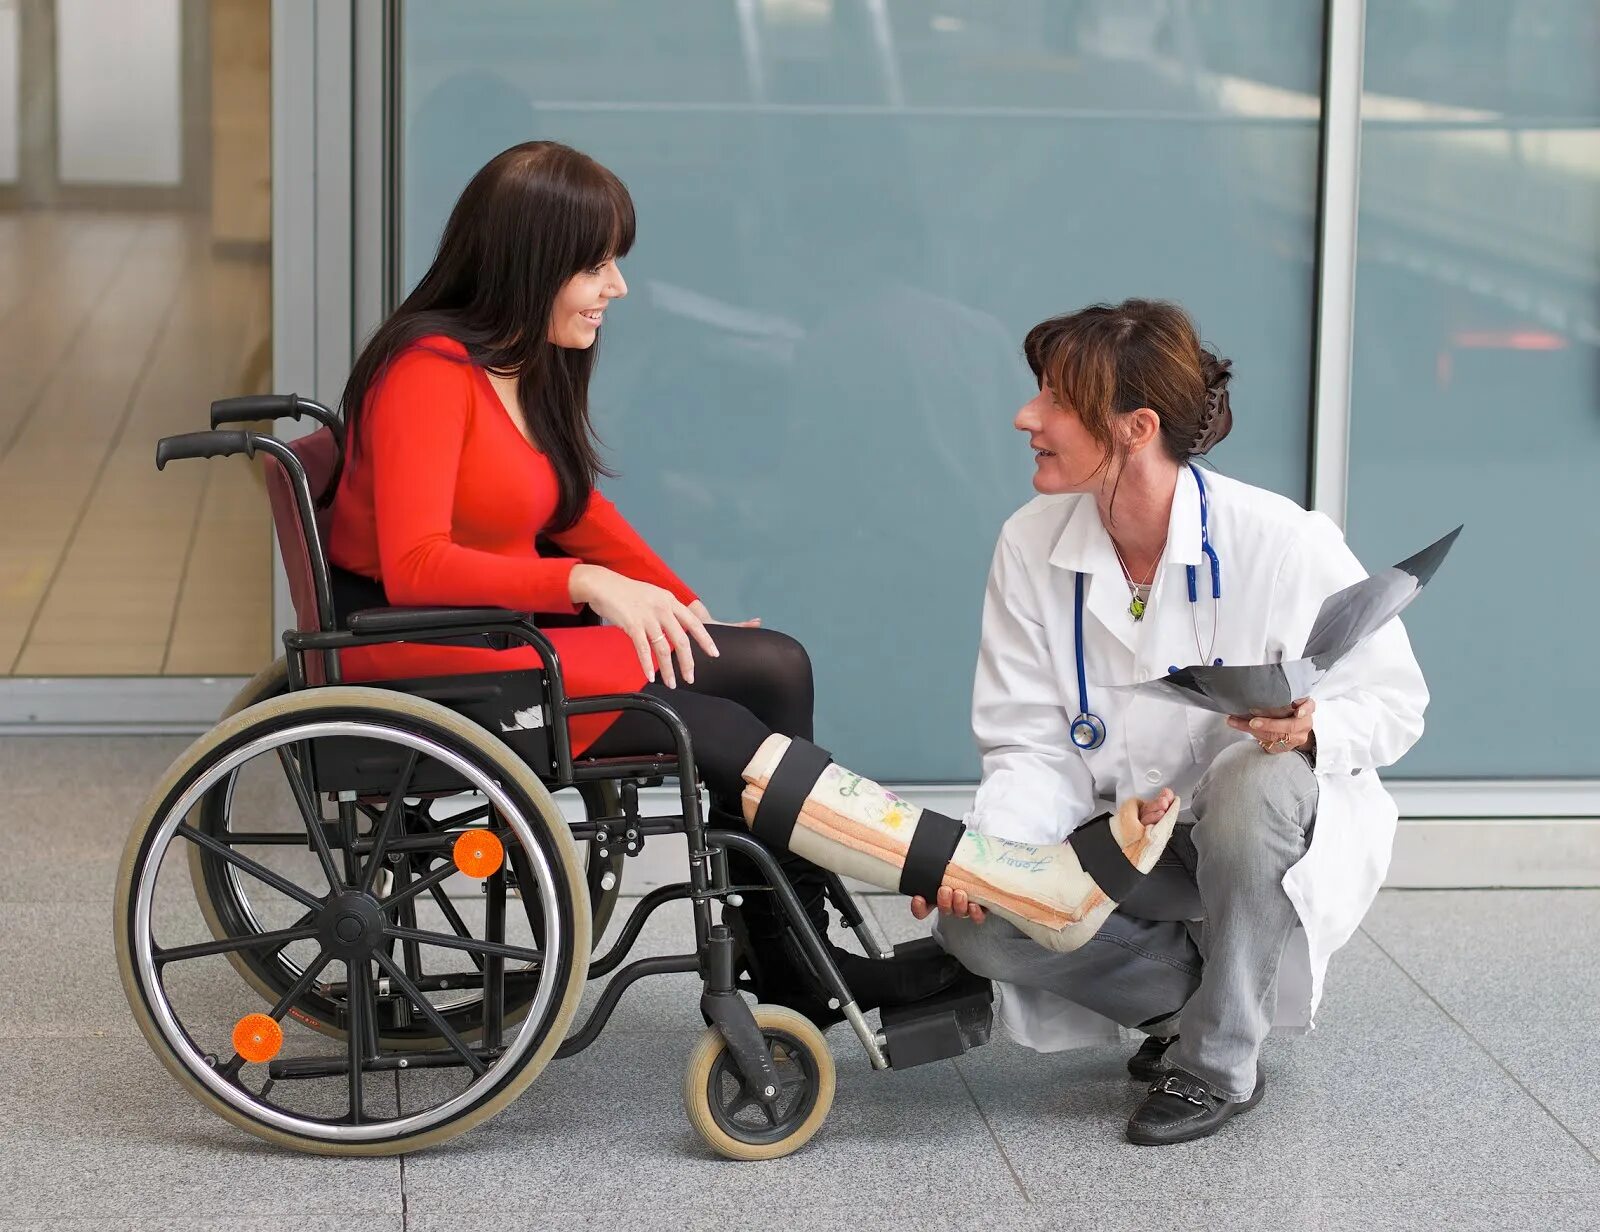 Инвалидность помогу. Инвалид и врач. Медицина и реабилитация инвалидов. Реабилитация инвалидов. Профессиональная реабилитация инвалидов.